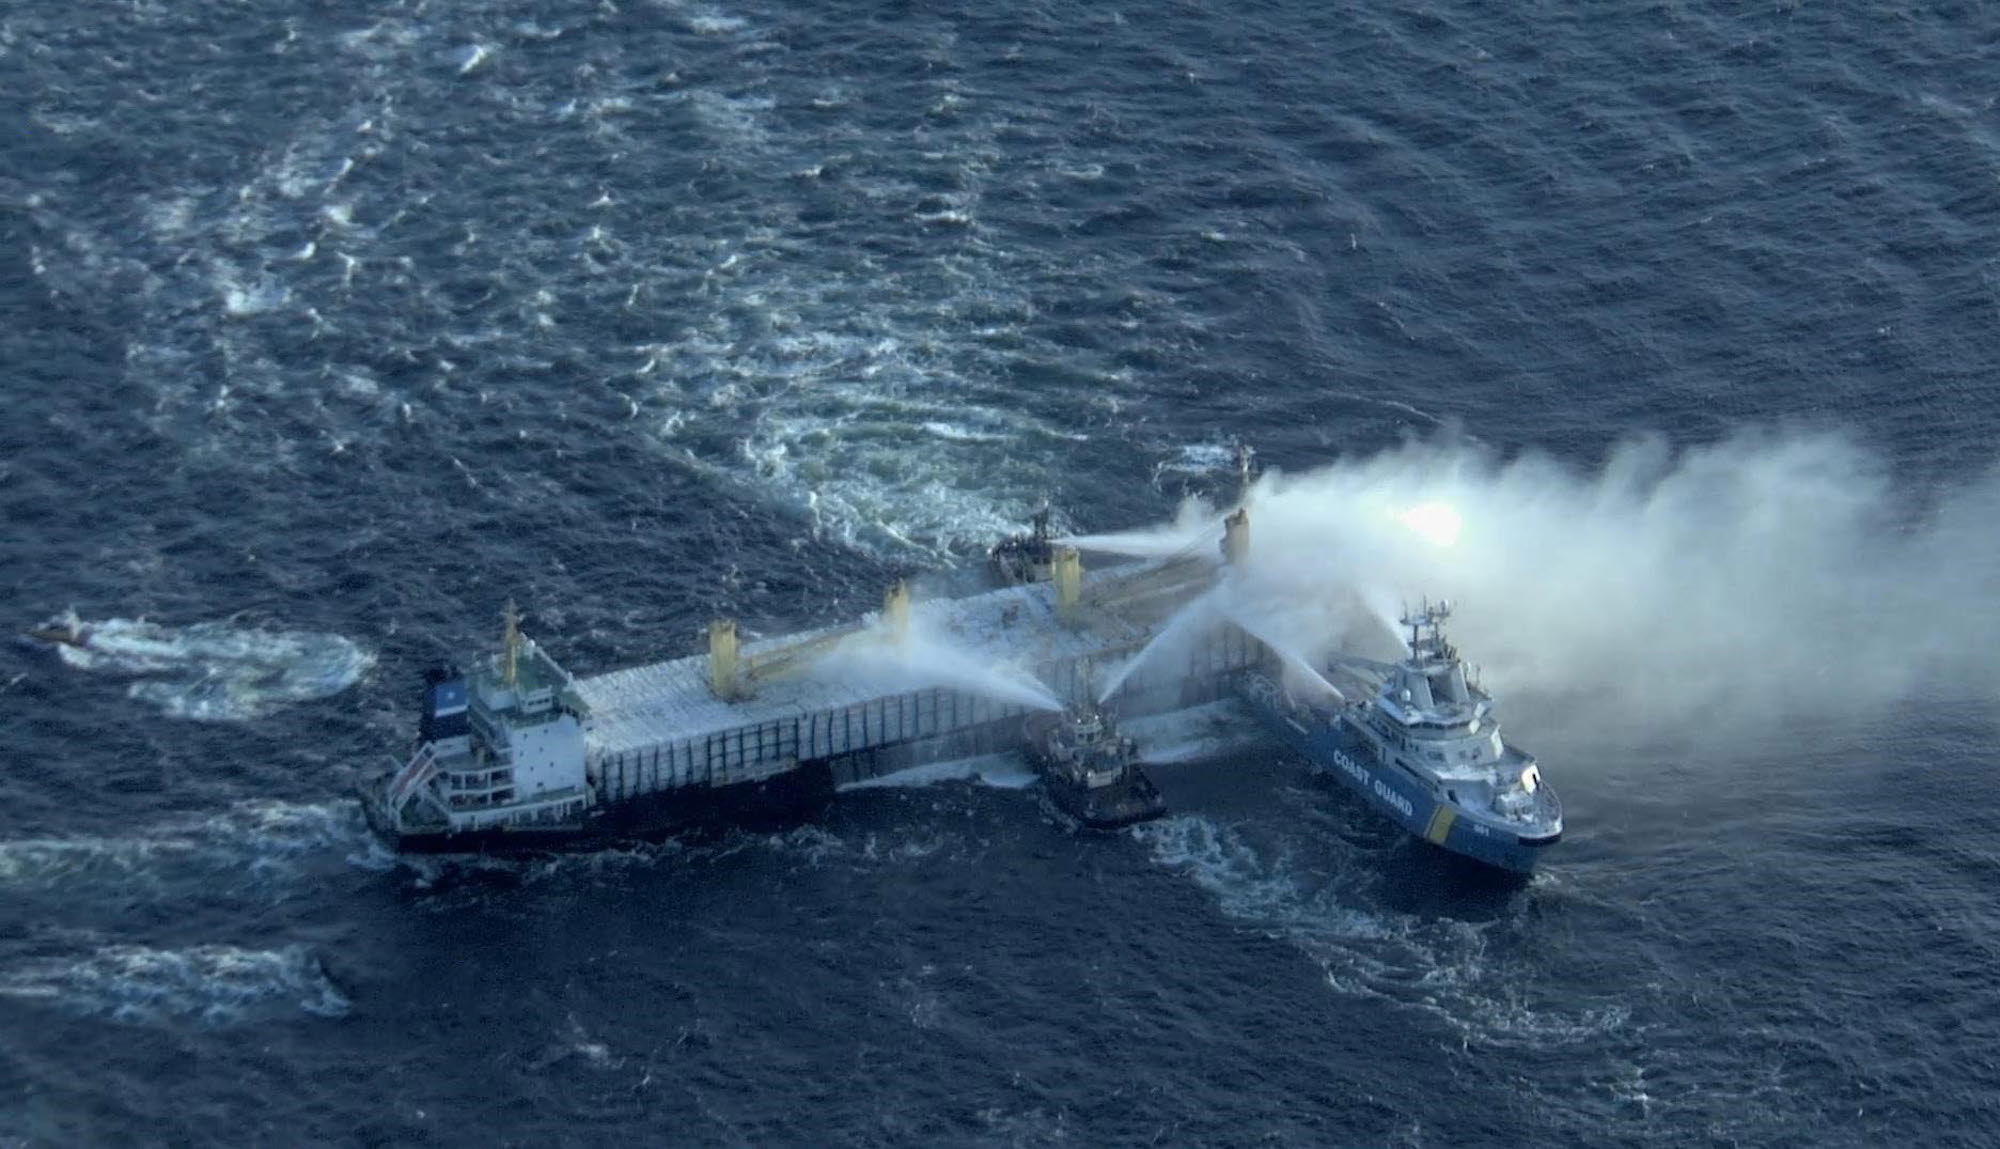 PHOTOS: Fire Burns on Timber Ship M/V Almirante Storni Off Sweden